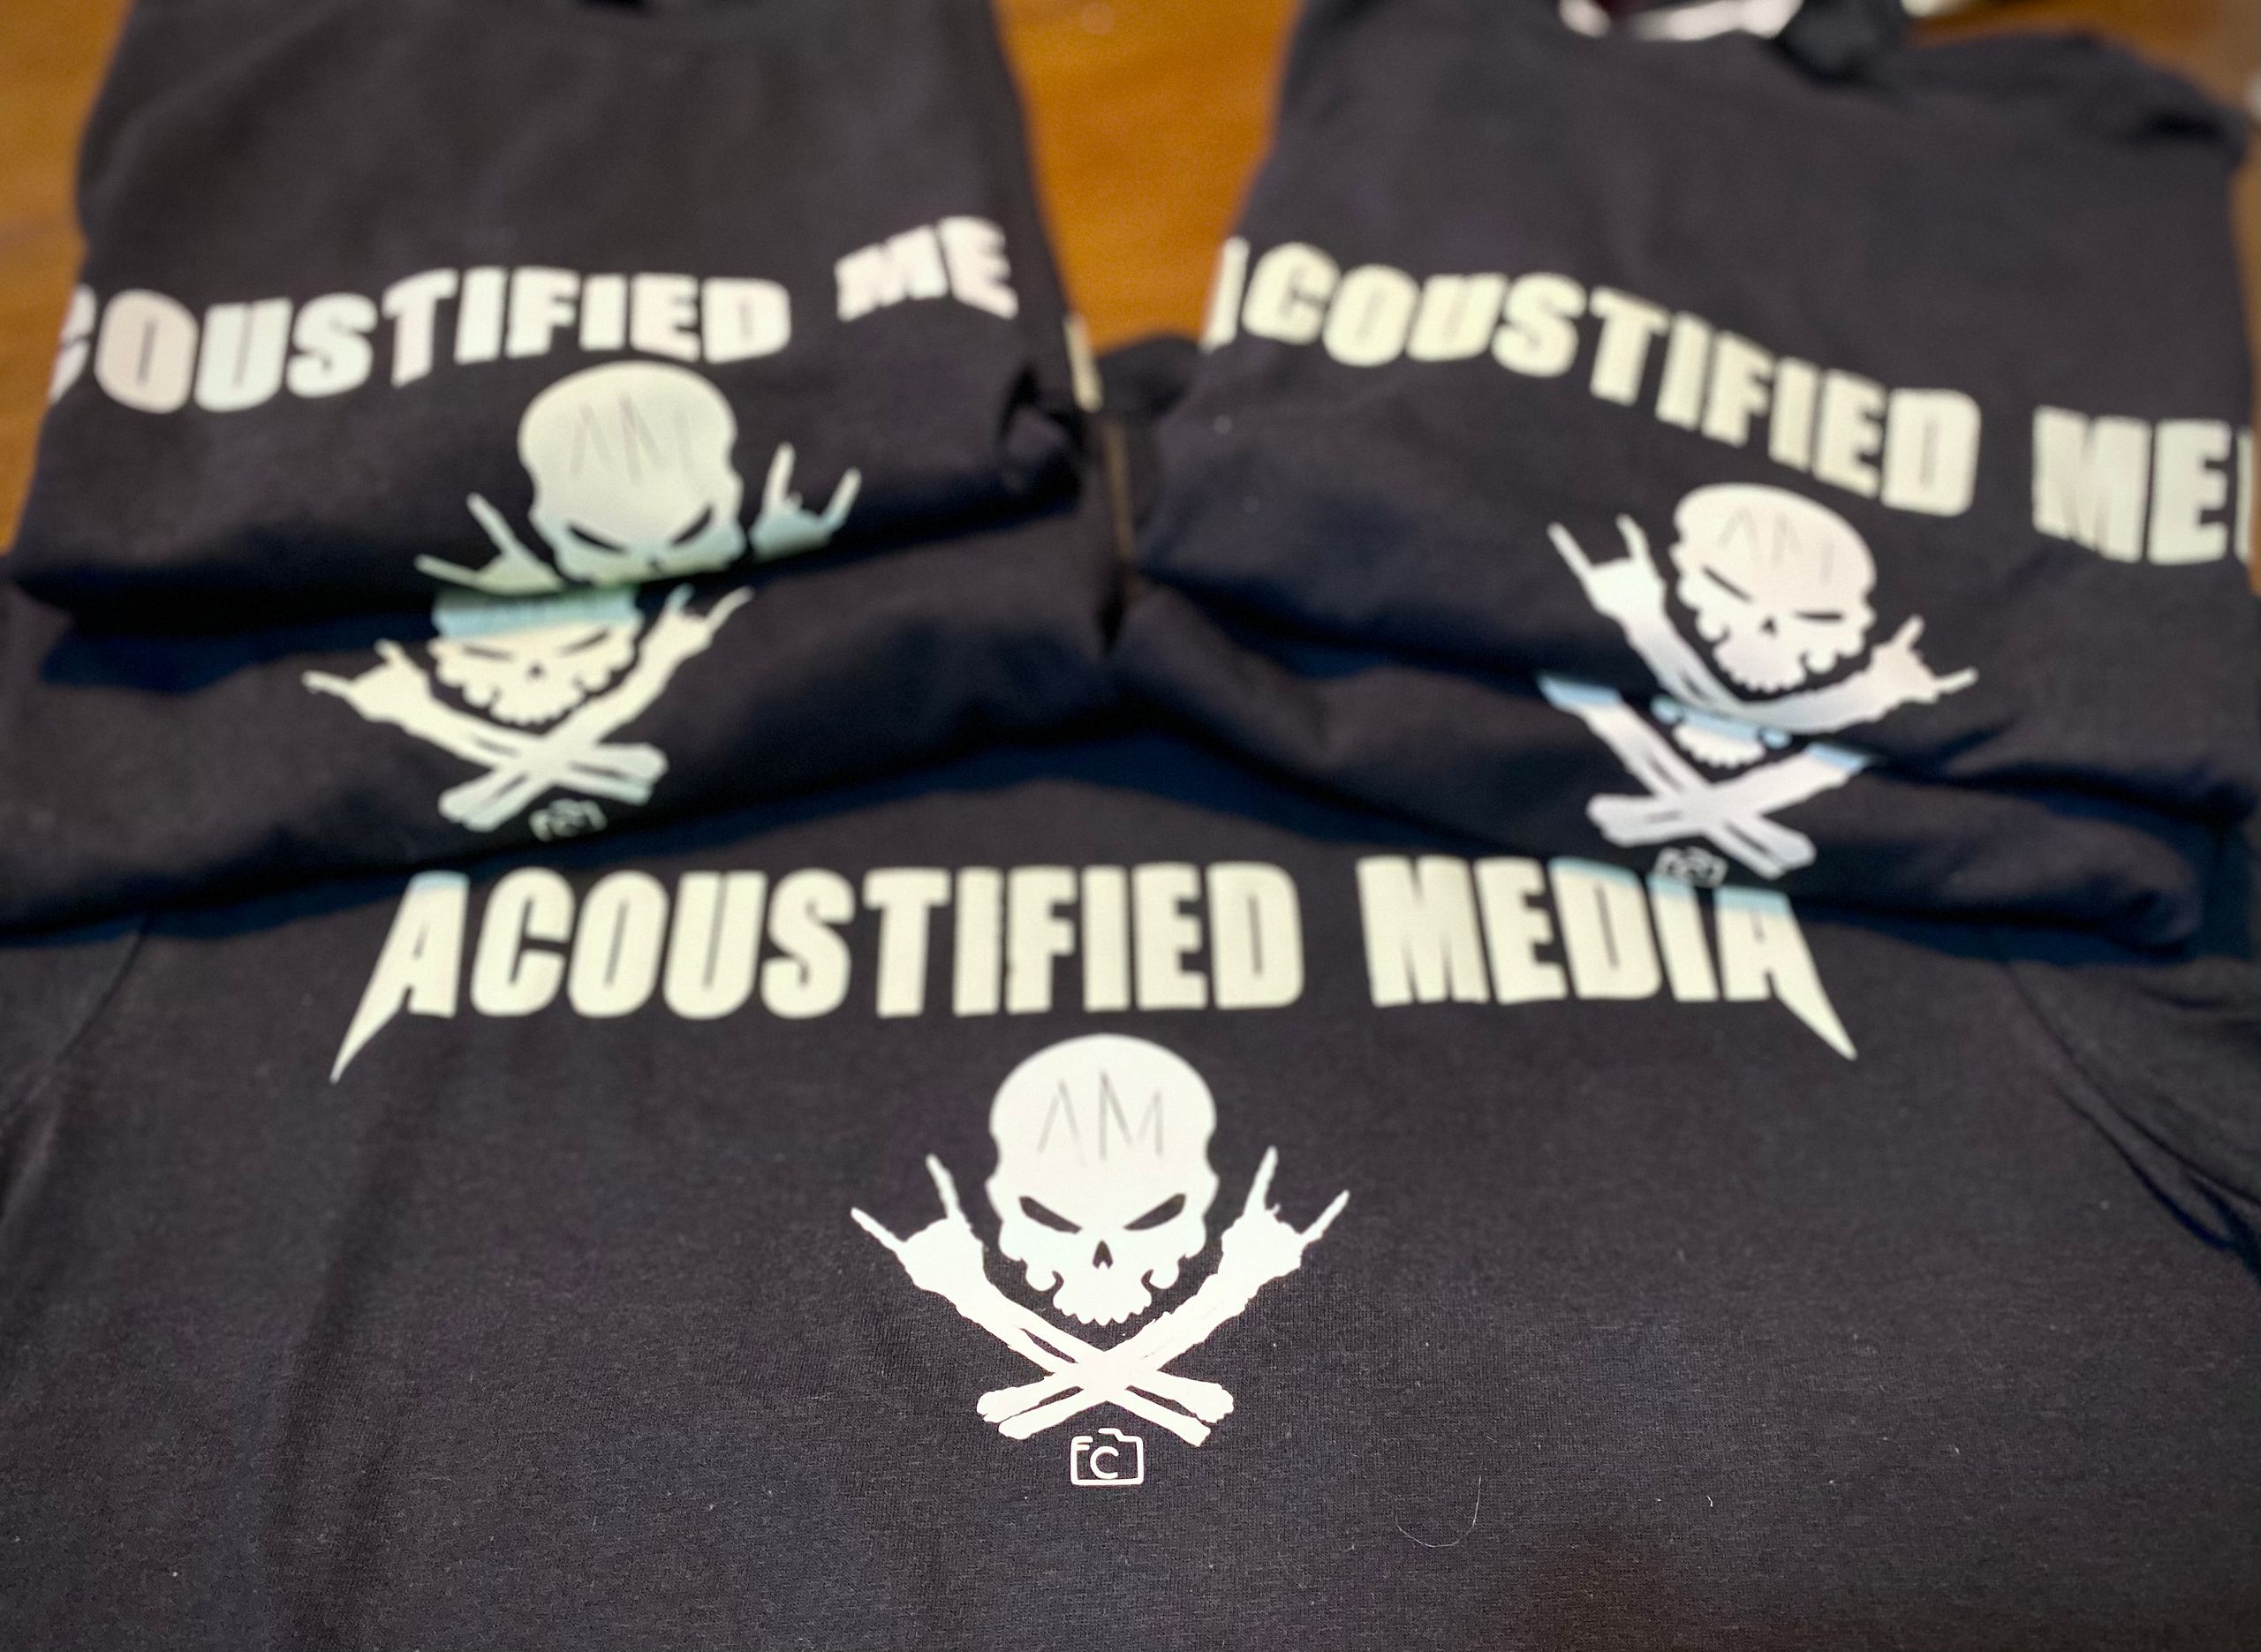 Glow-In-The-Dark Acoustified Media T-Shirt